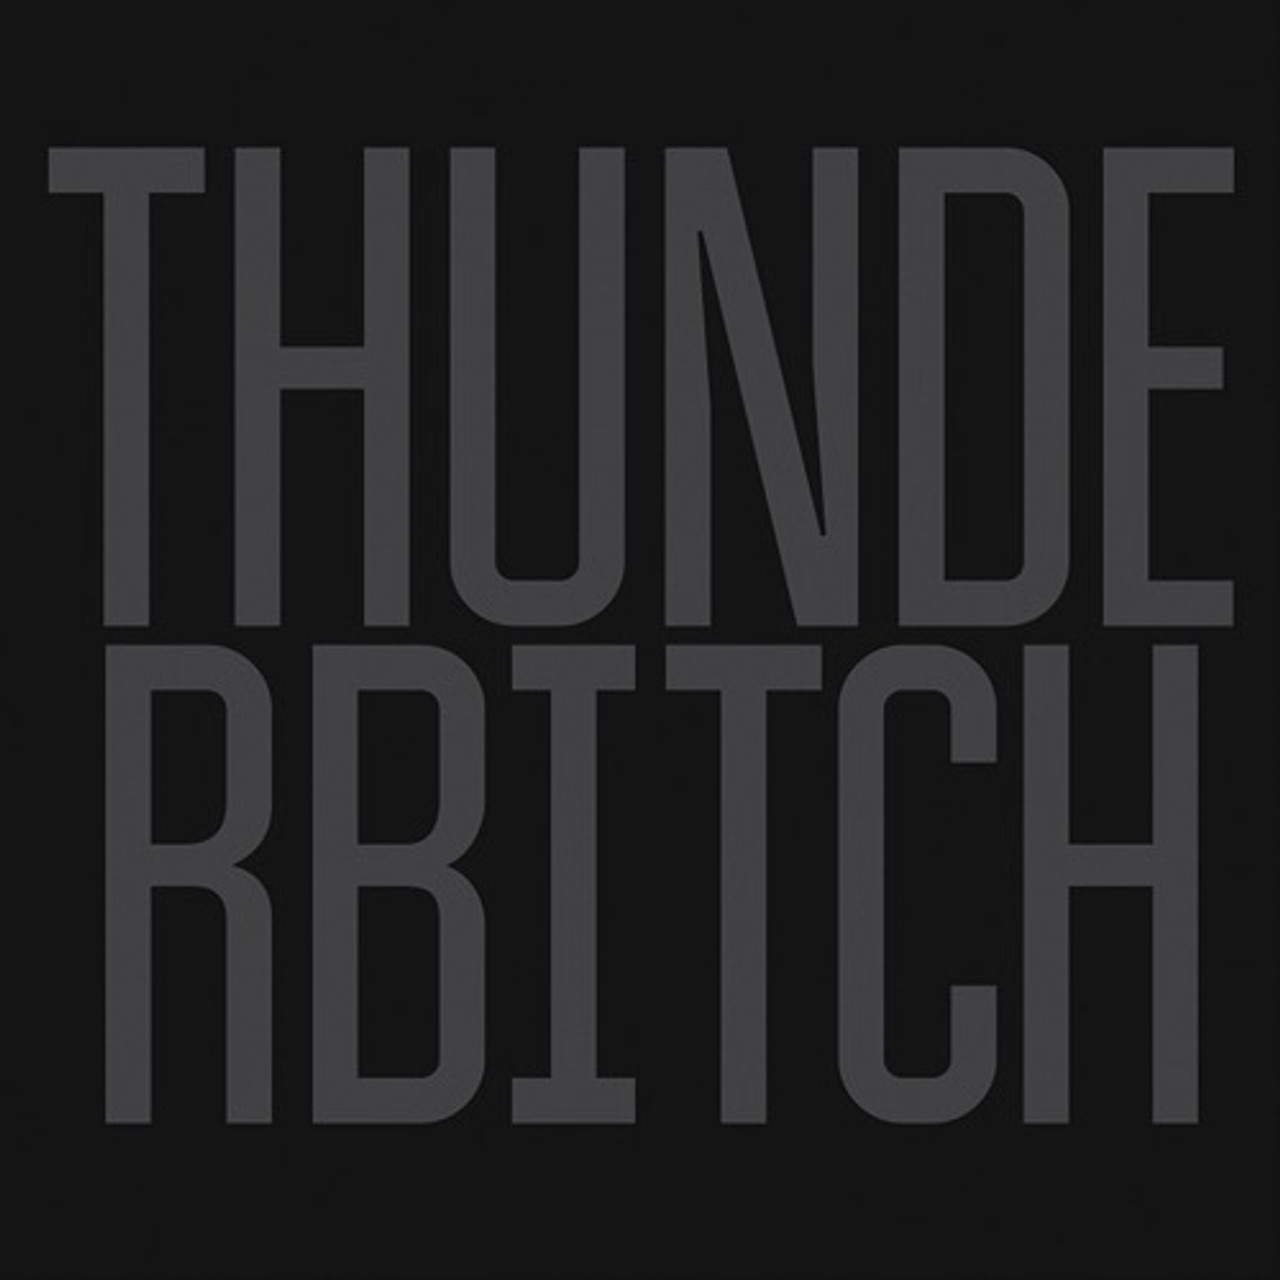 Thunderbitch (Alabama Shakes) - Thunderbitch (Vinyl LP) - Music Direct